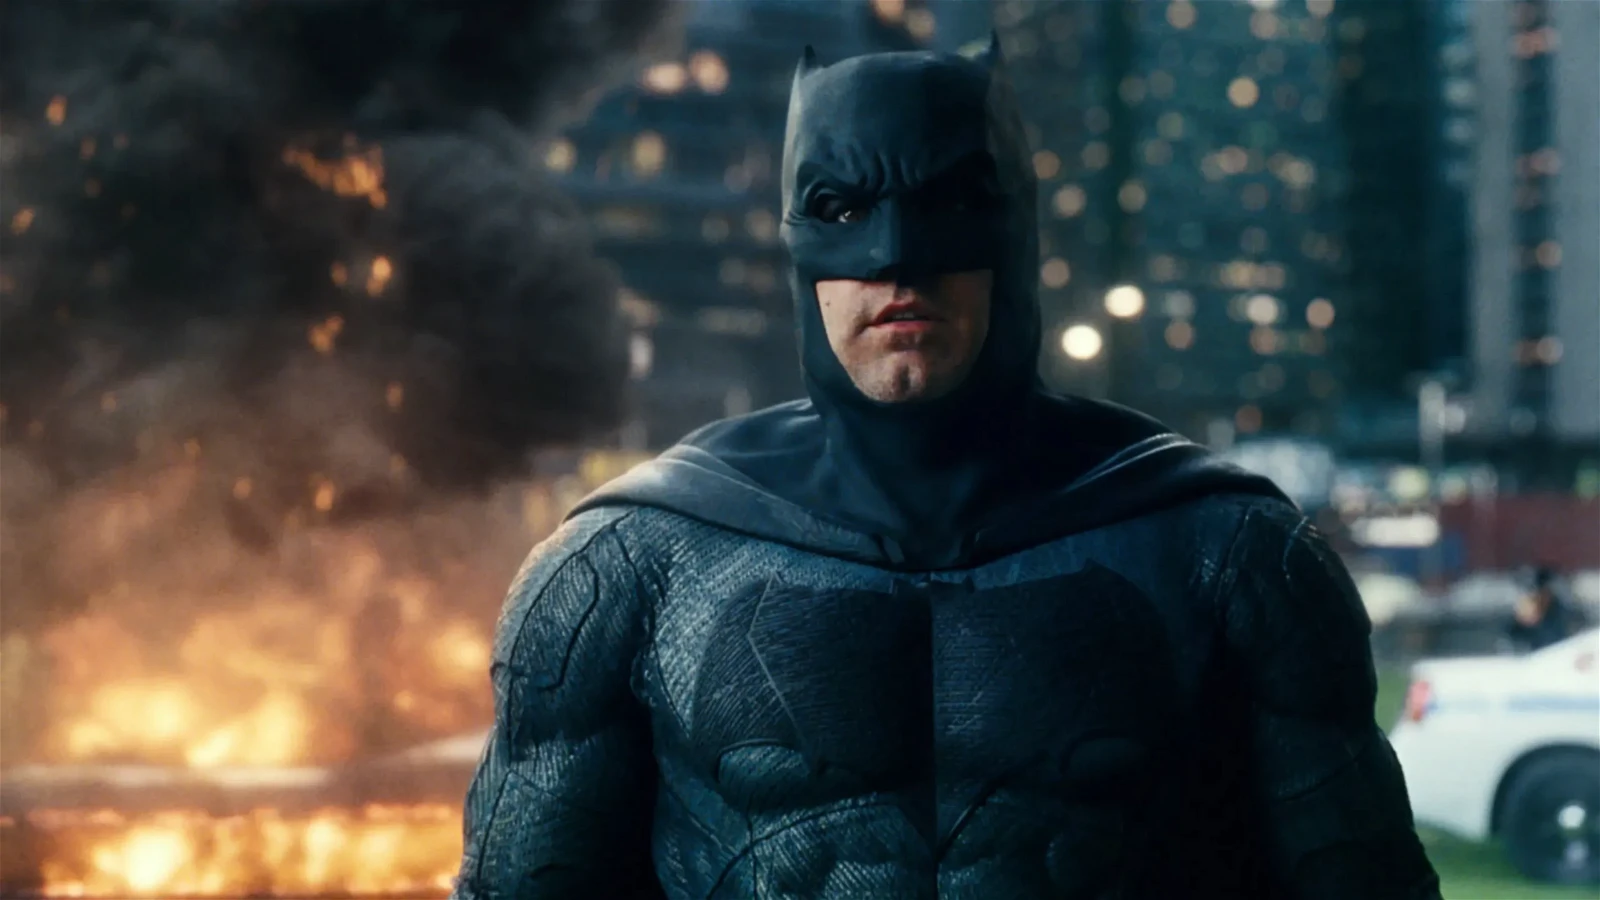 Ben Affleck as Batman in a still from Justice League 